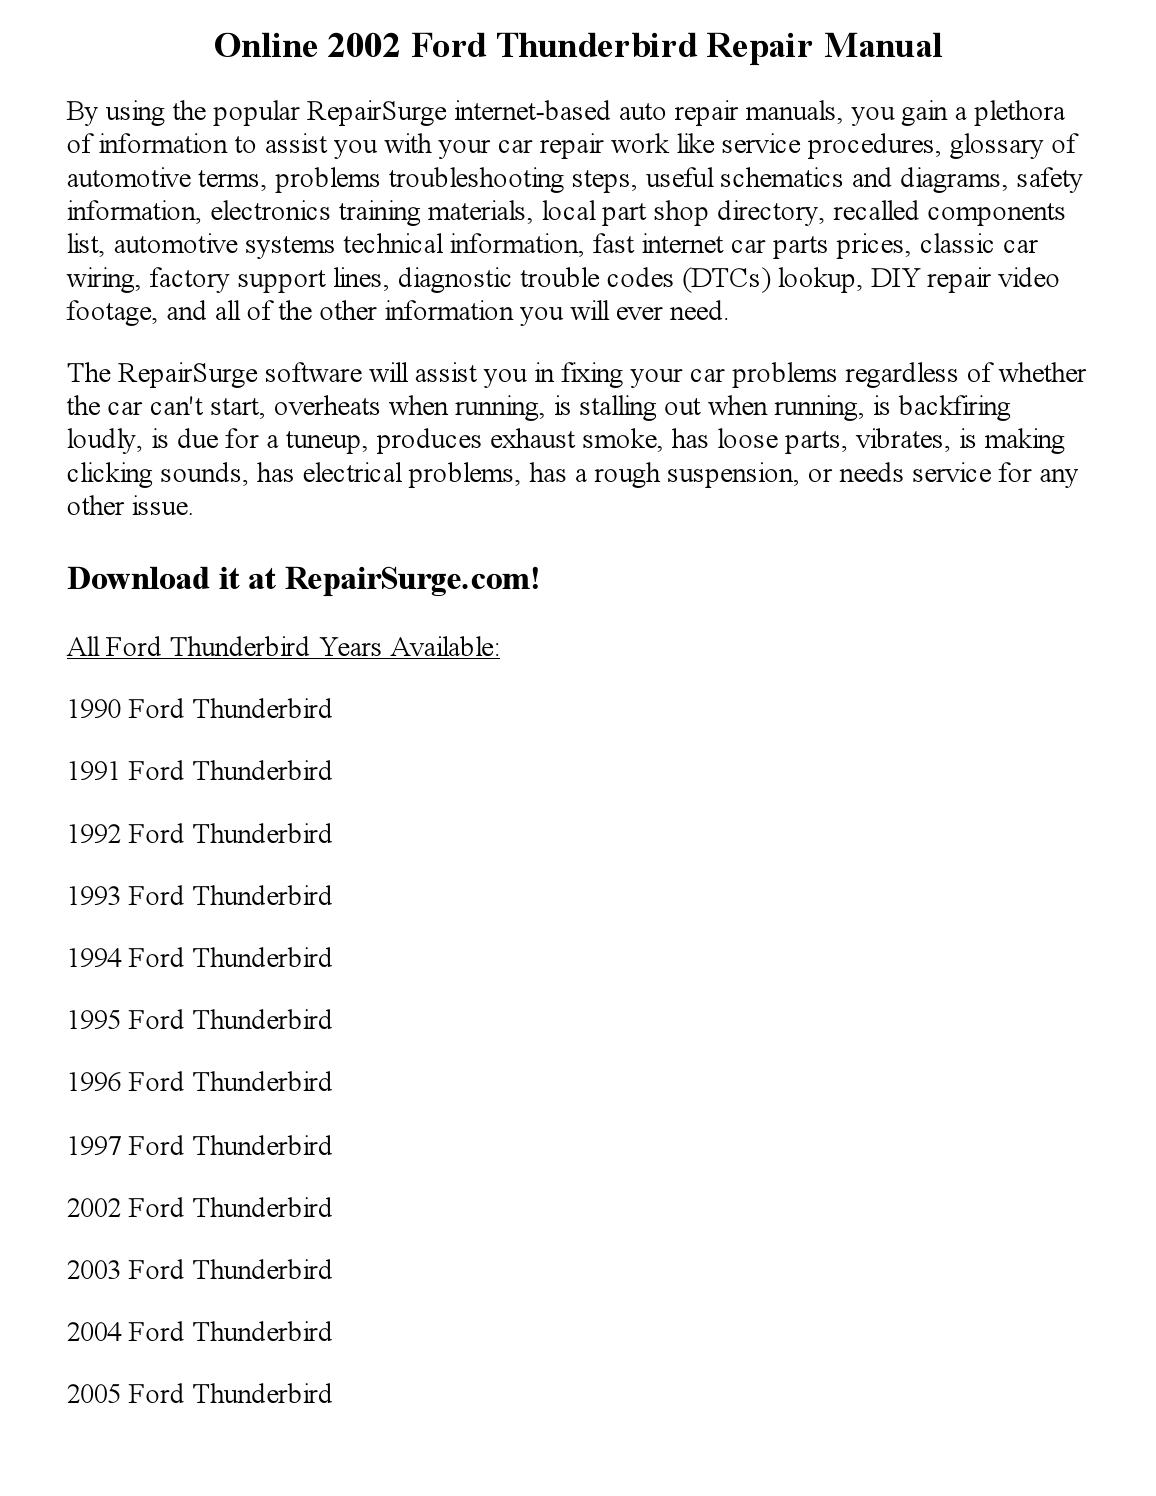 2002 ford thunderbird service manual